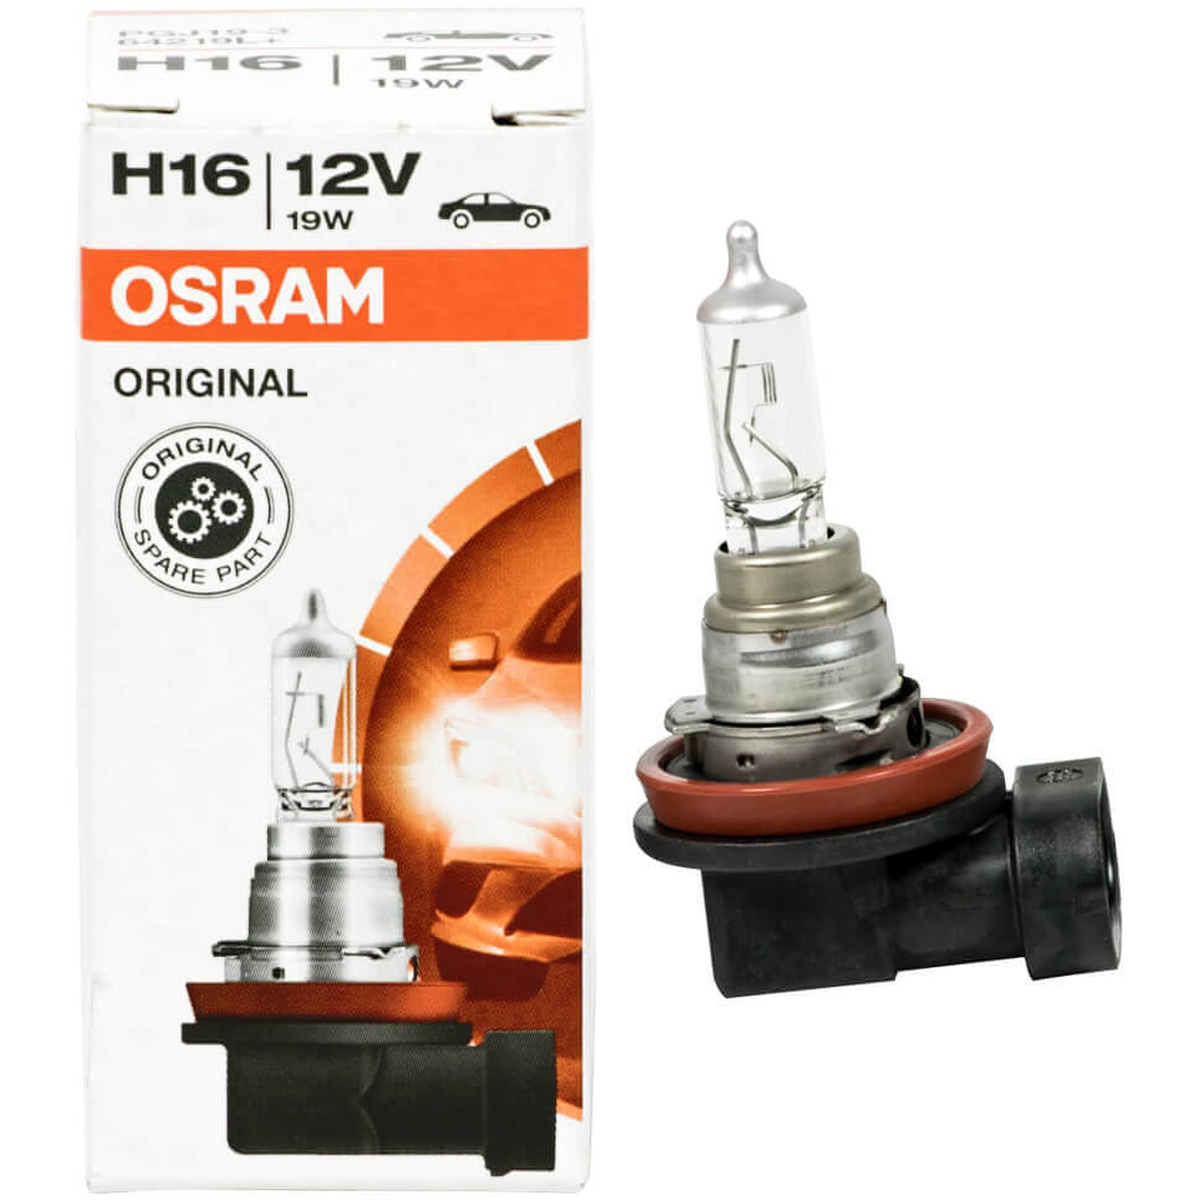 Автолампа H16 "Osram", Original, 12V, 19W